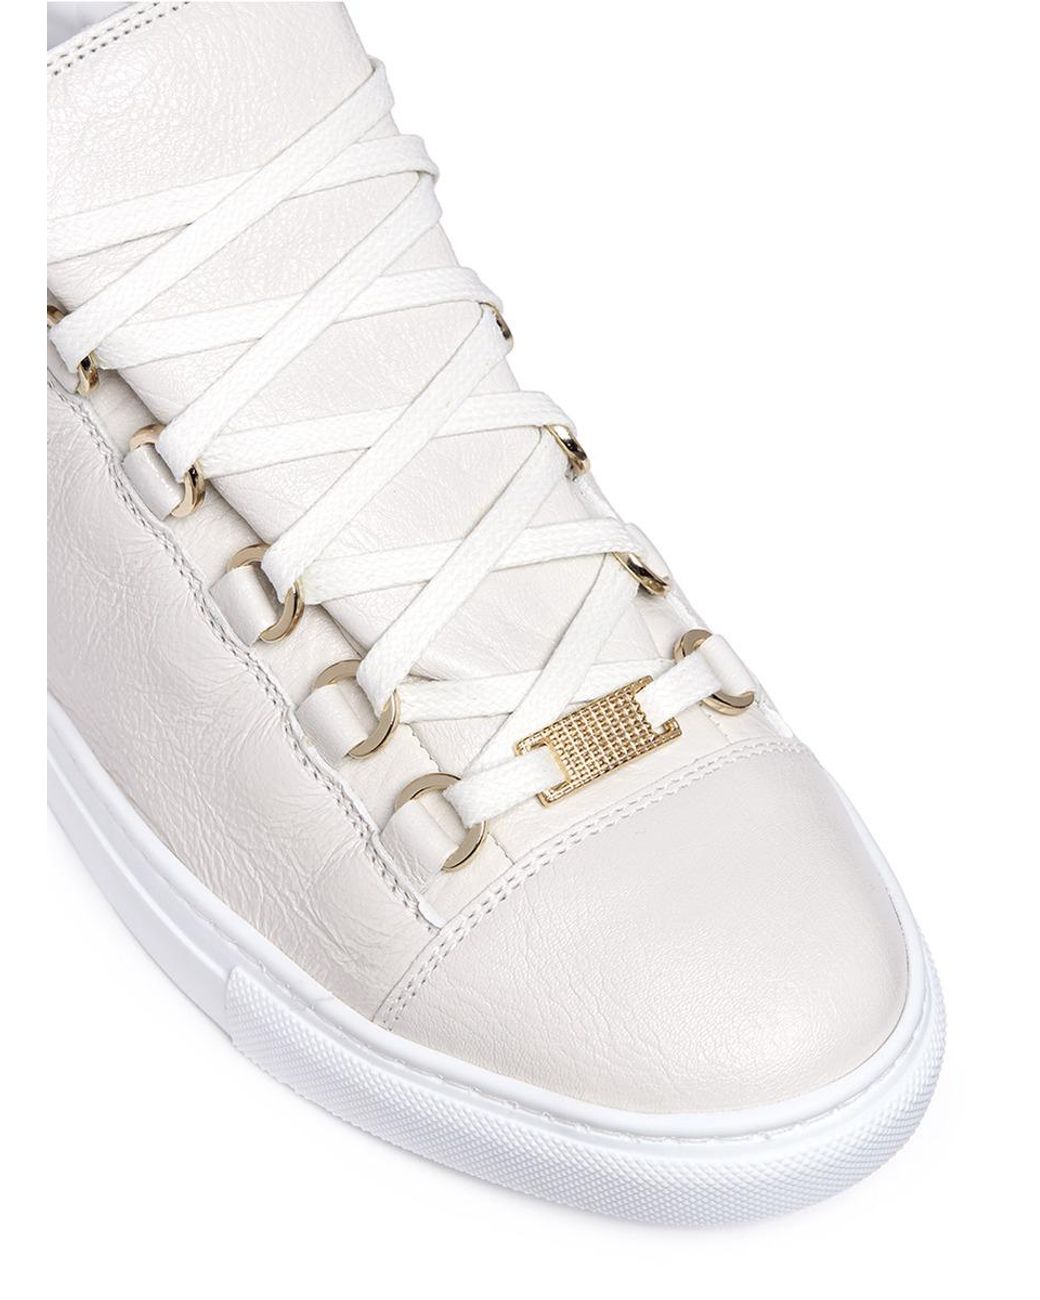 Balenciaga Lambskin Leather Sneakers in White | Lyst